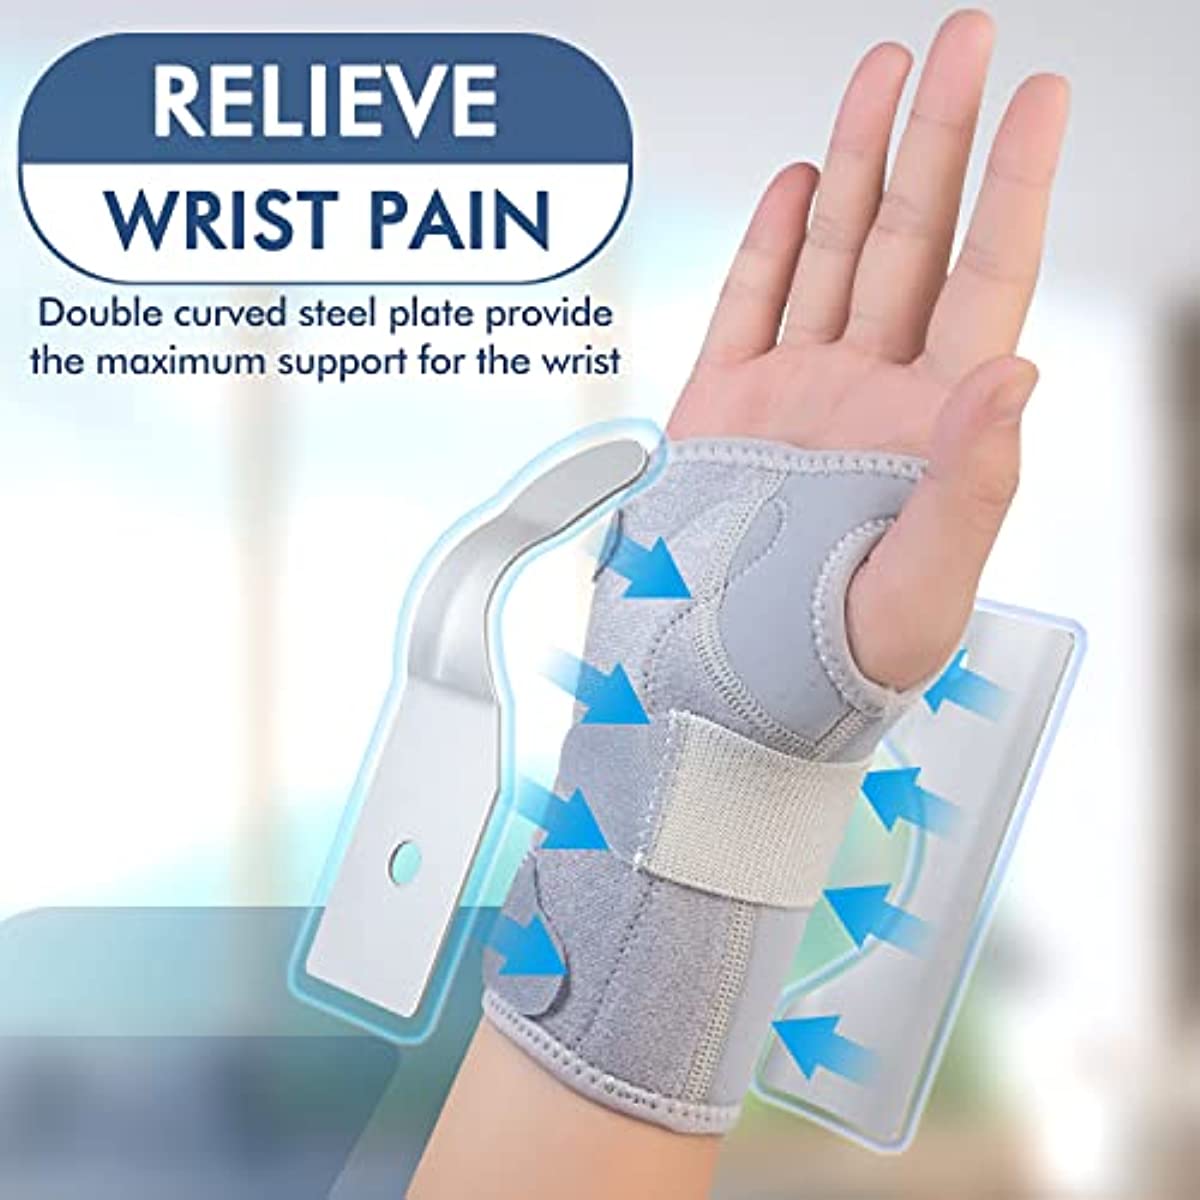 EDNYZAKRN Wrist Splint Night Support, Left Hand Wrist Brace for Carpal Tunnel Syndrome, Arthritis, Tendonitis, Sprains, Pain Relief, Metal Wrist Stabilizer for Men and Women